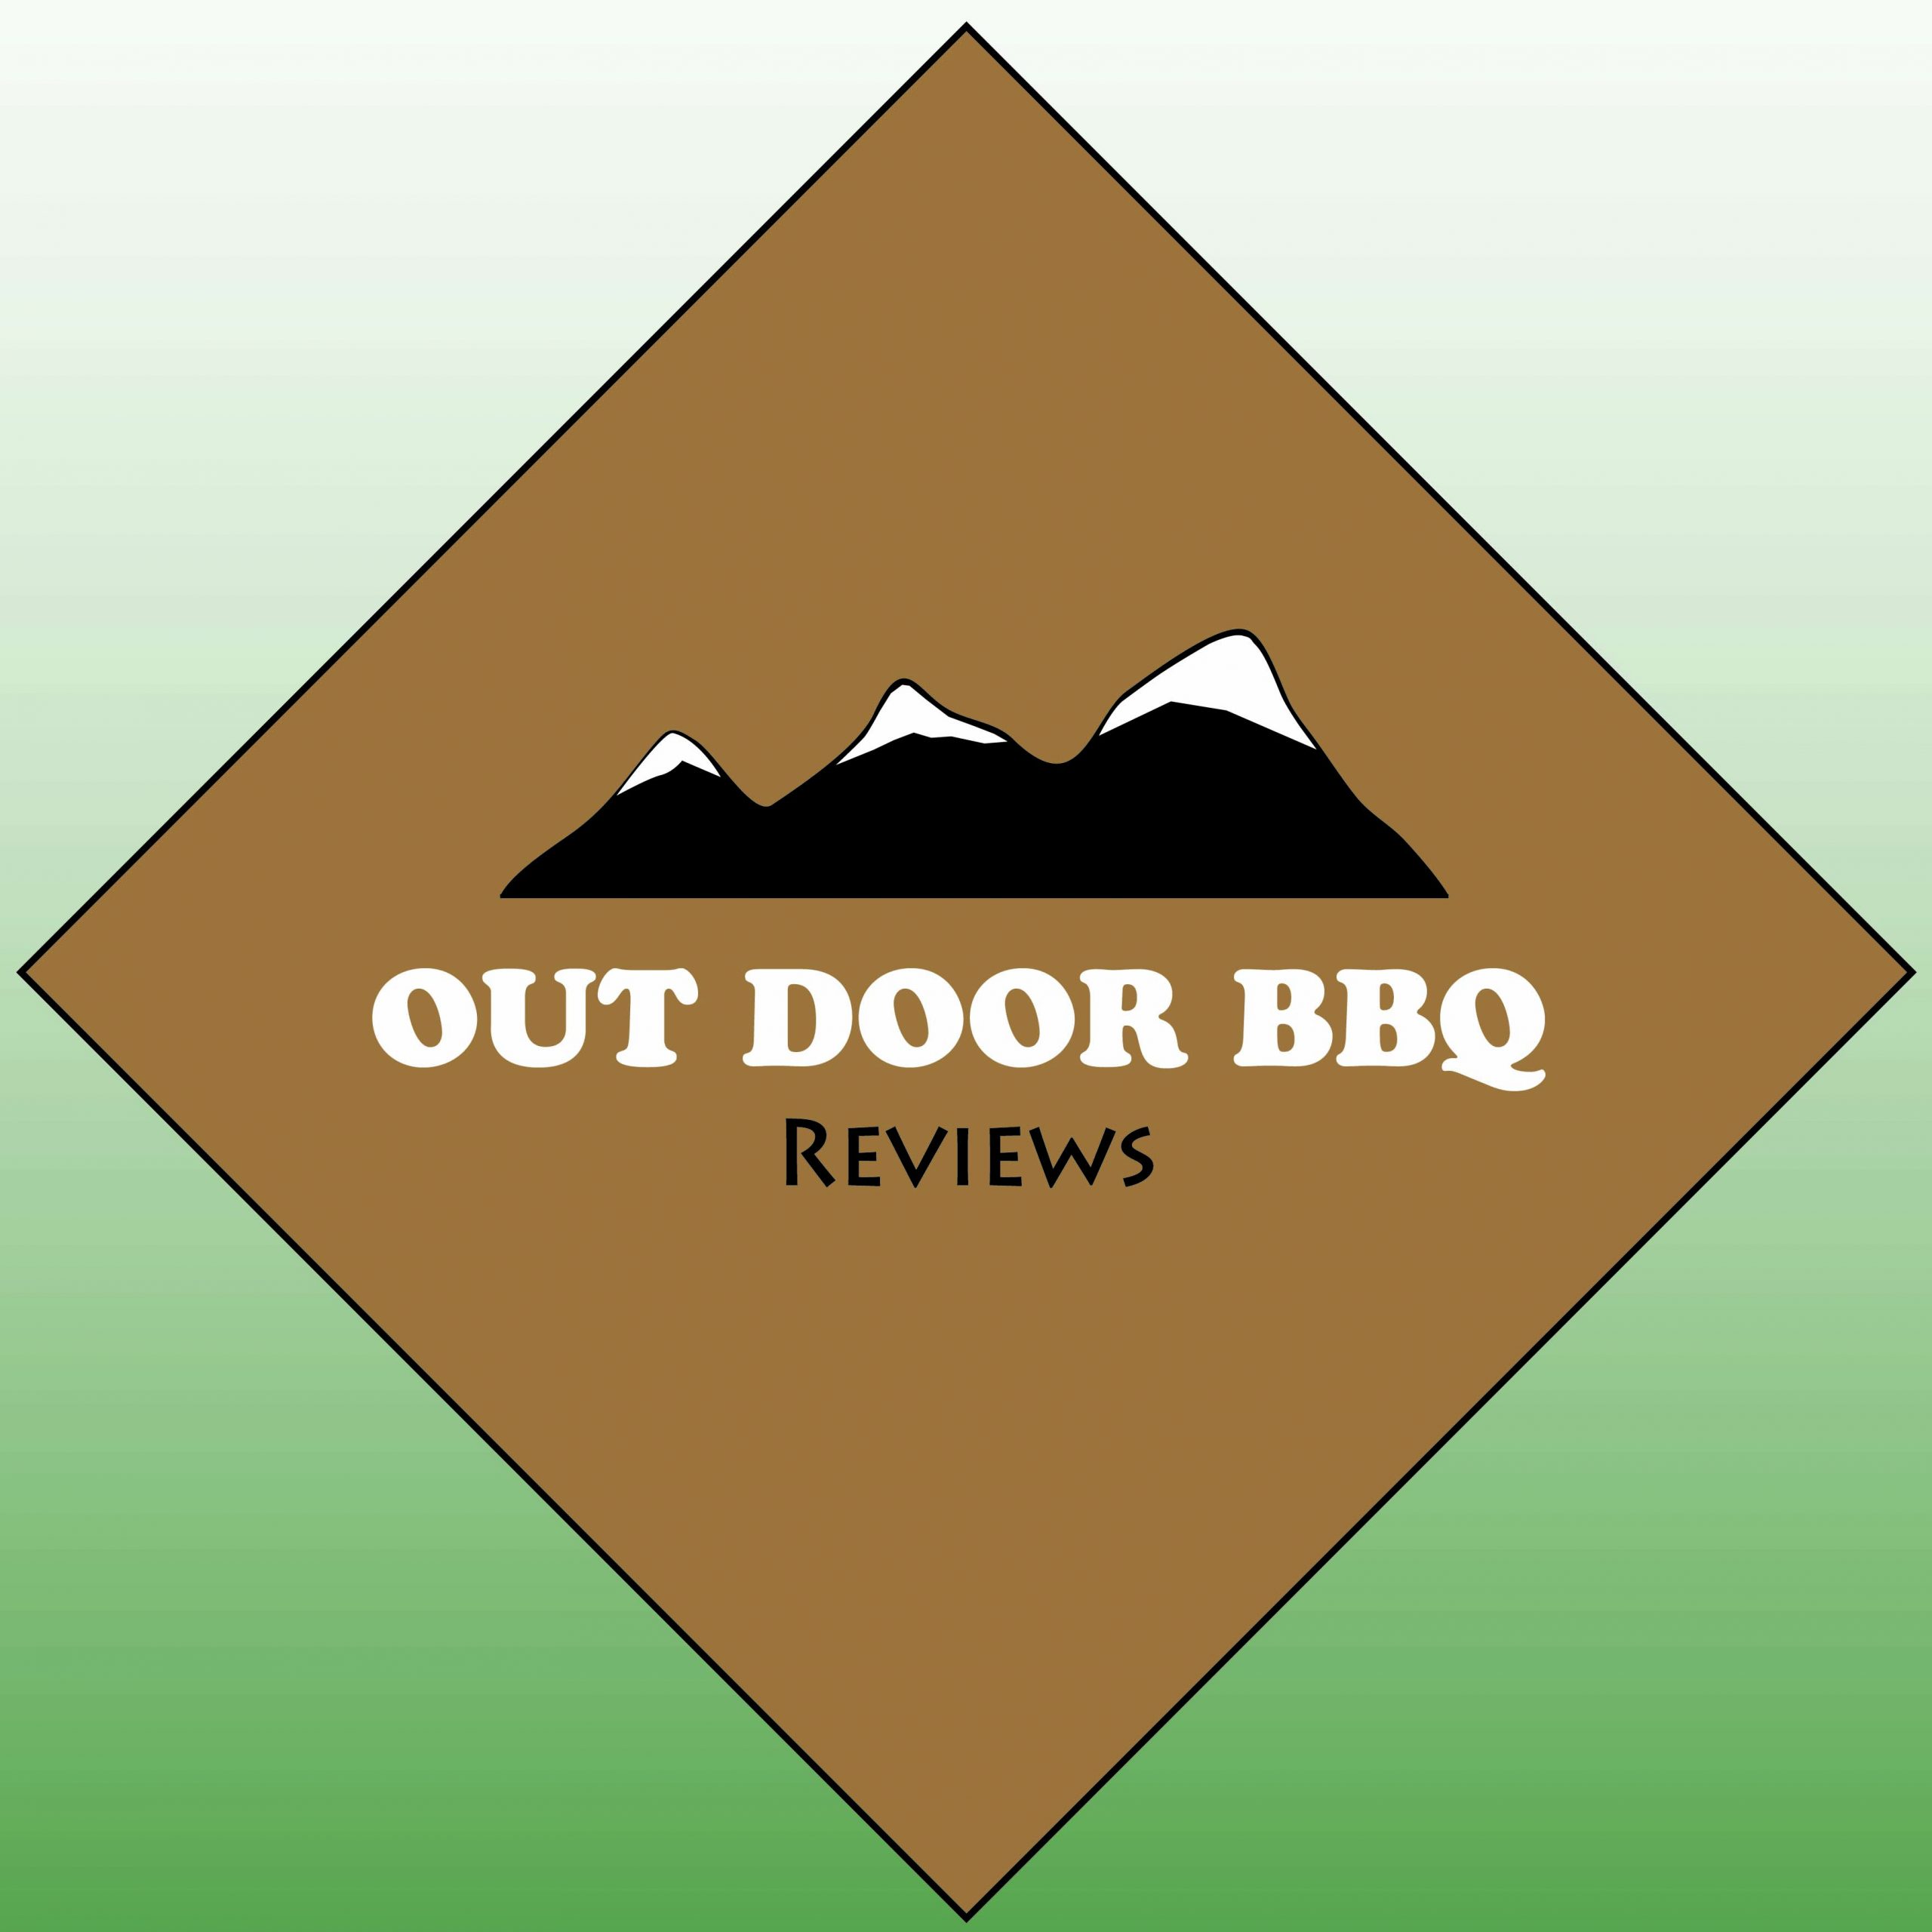 out door bbq reviews logo